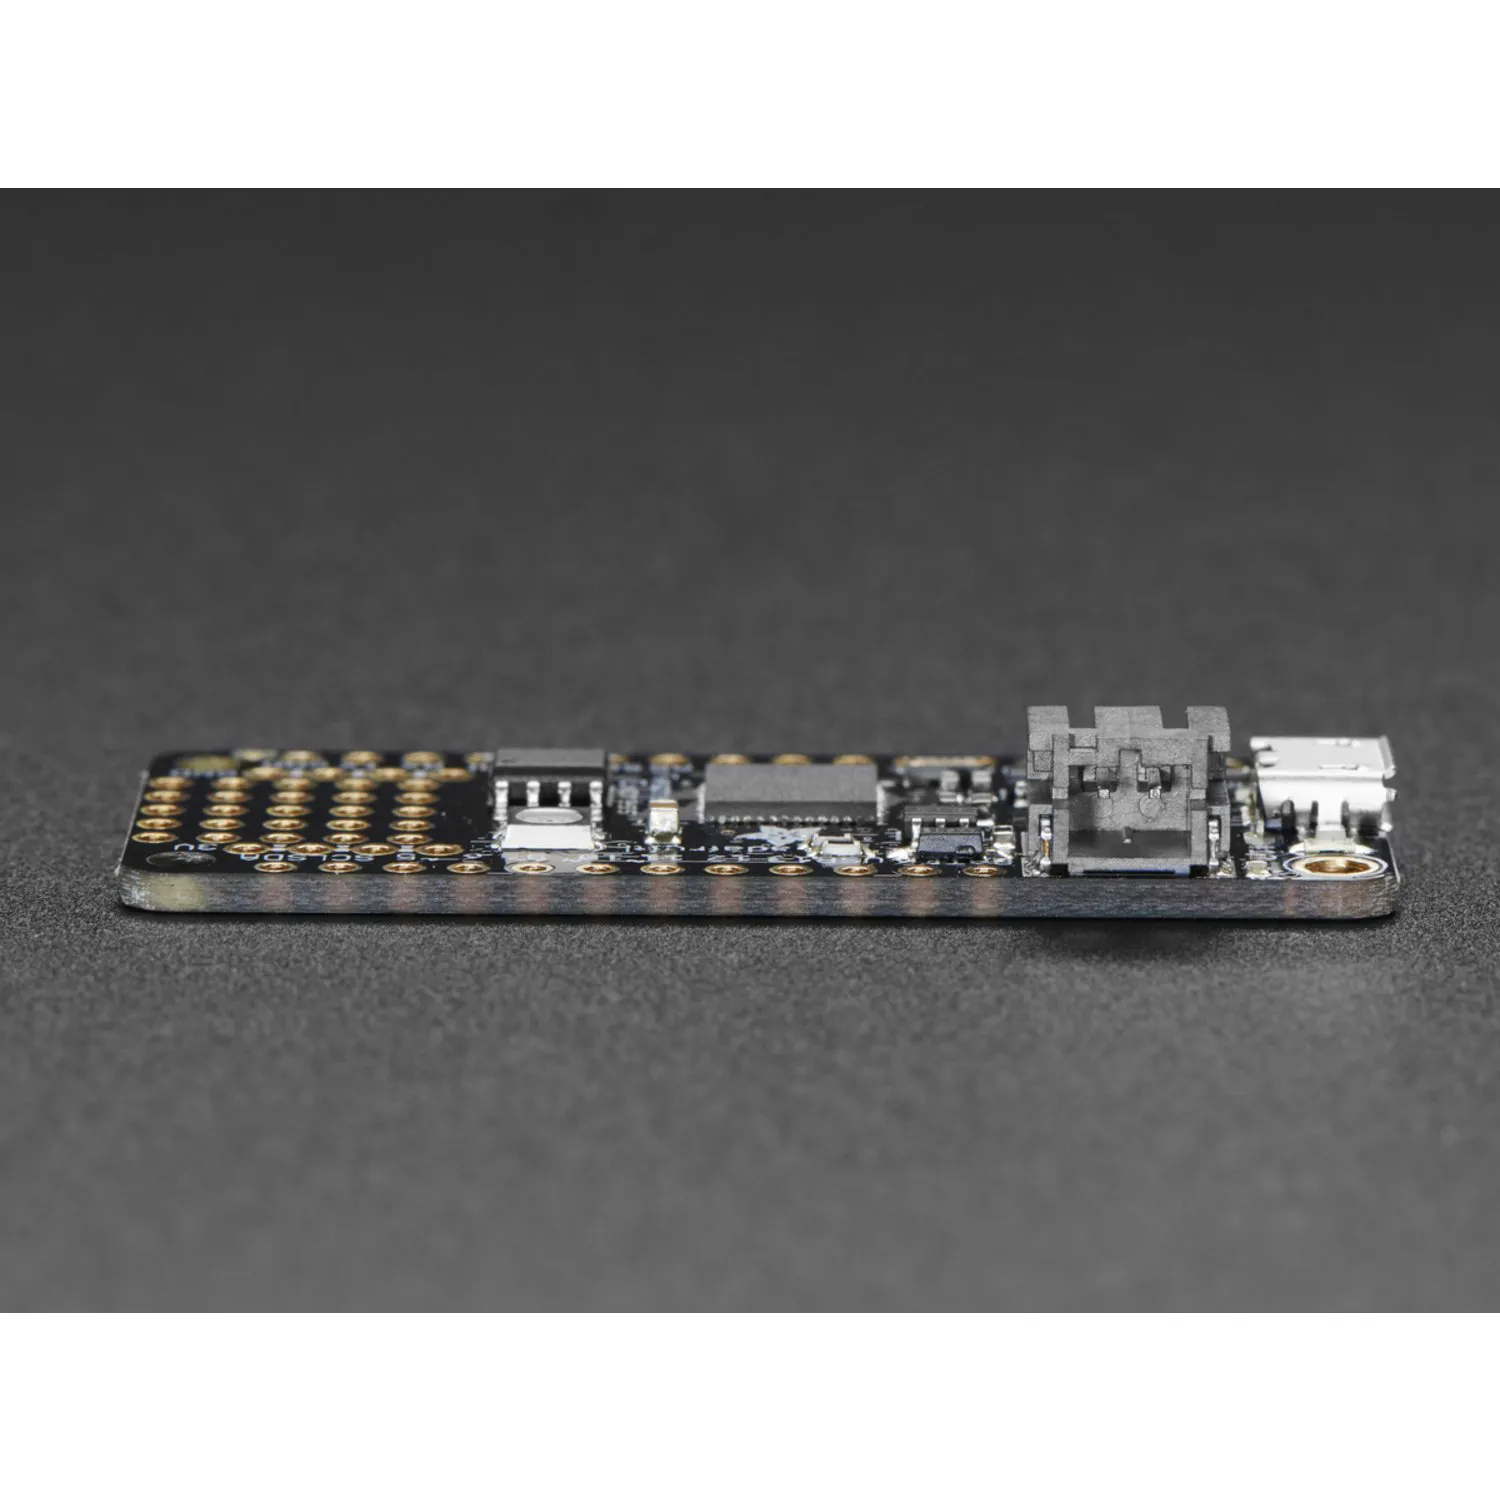 Photo of Adafruit Feather M0 Express - Designed for CircuitPython [ATSAMD21 Cortex M0]